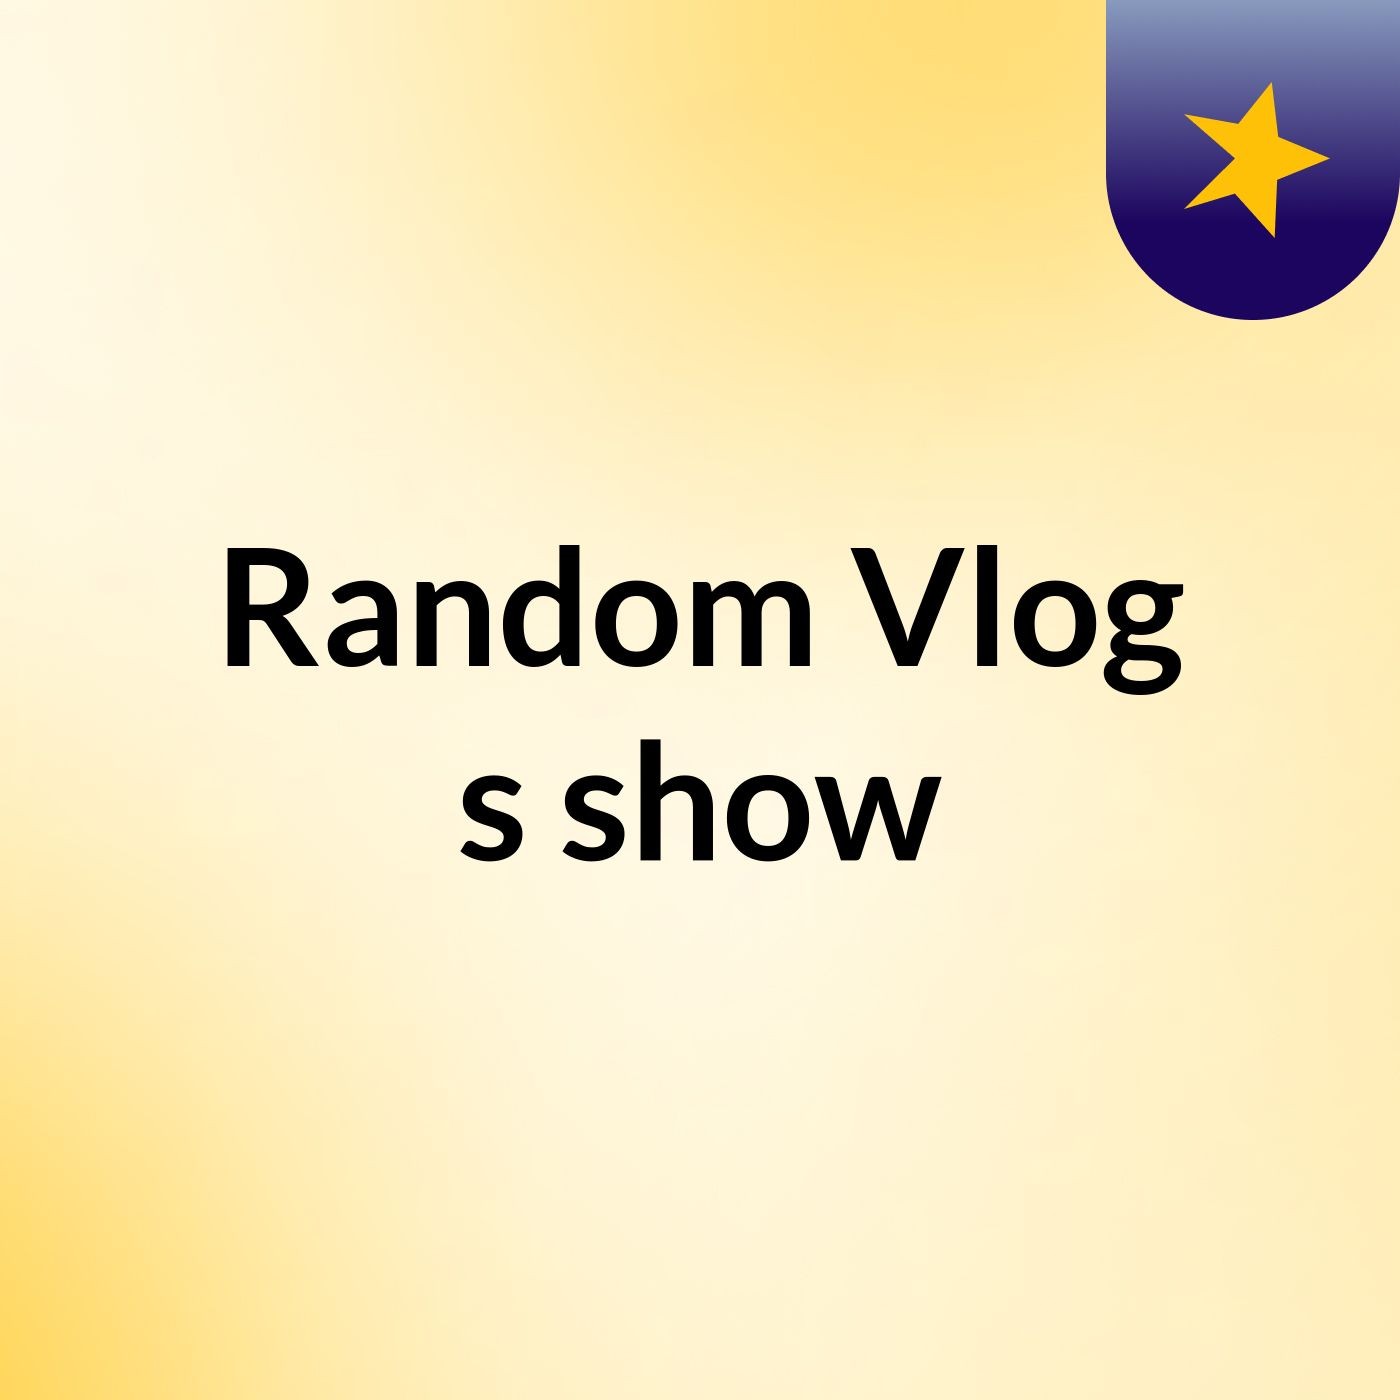 Random Vlog's show